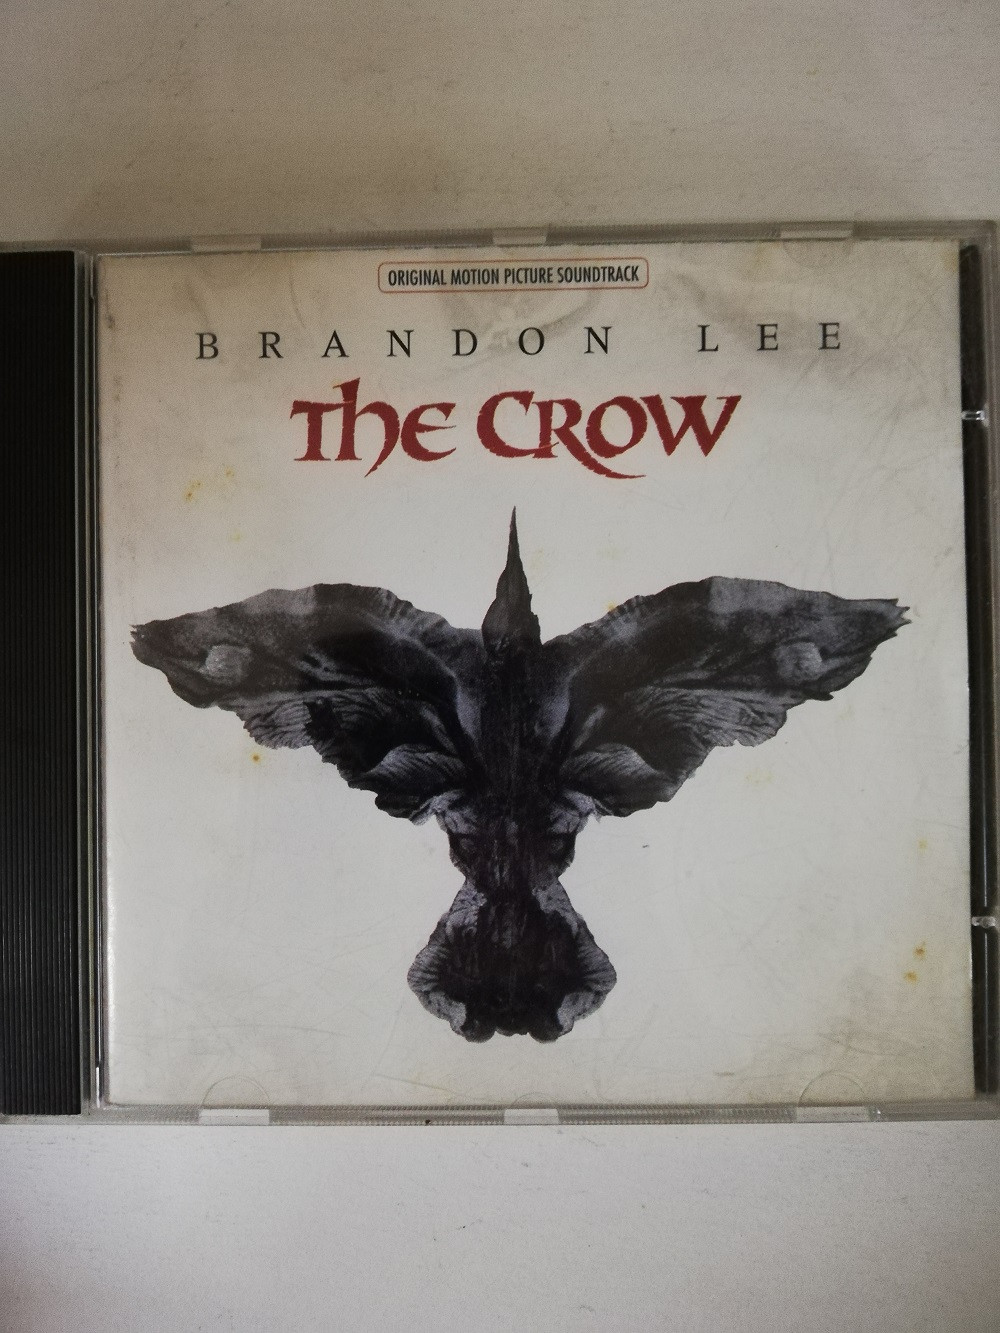 Imagen CD THE CROW - ORIGINAL MOTION PICTURE SOUNDTRACK